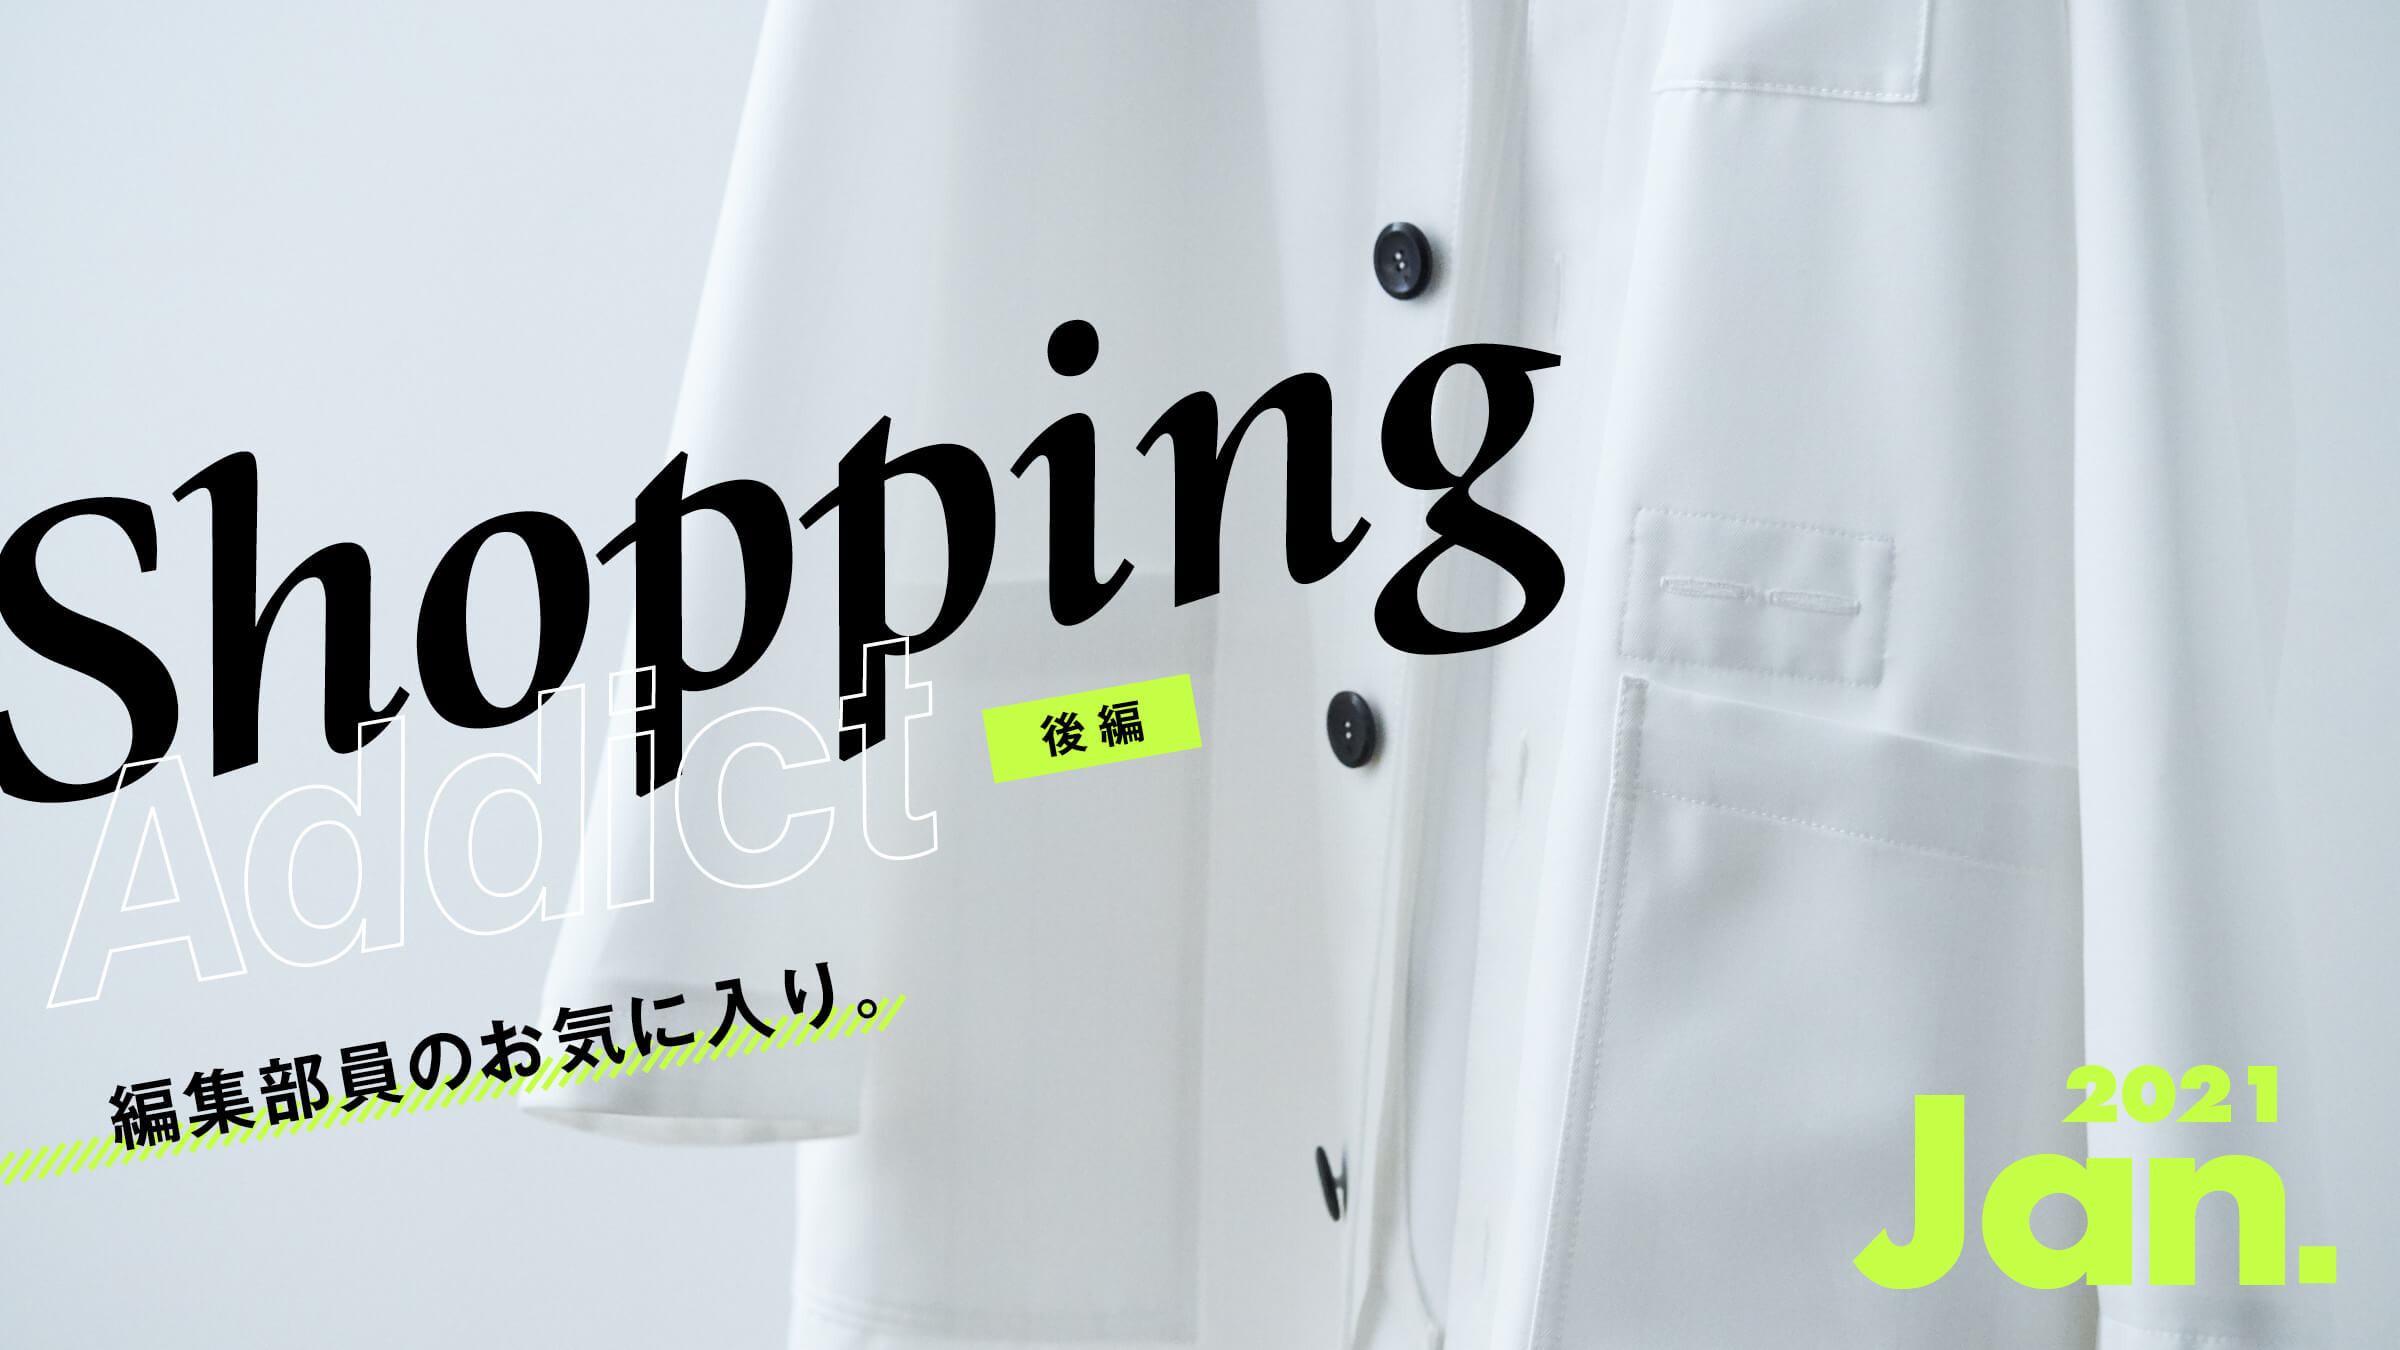 Shopping Addict 2021 Jan. 〜編集部員のお気に入り〜 後編